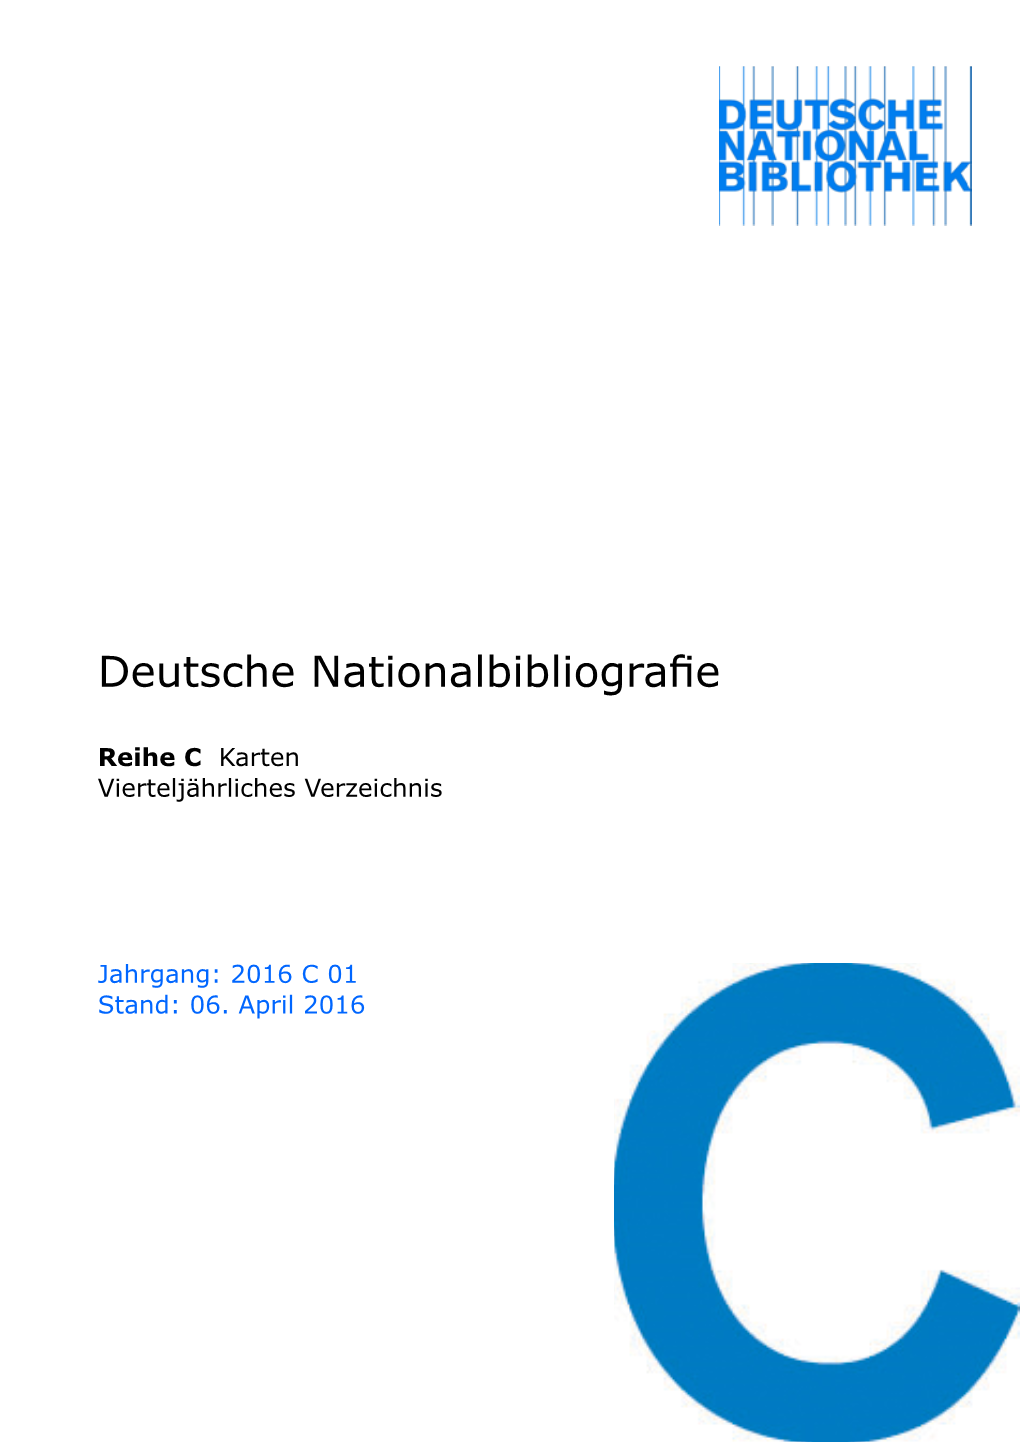 Deutsche Nationalbibliografie 2016 C 01